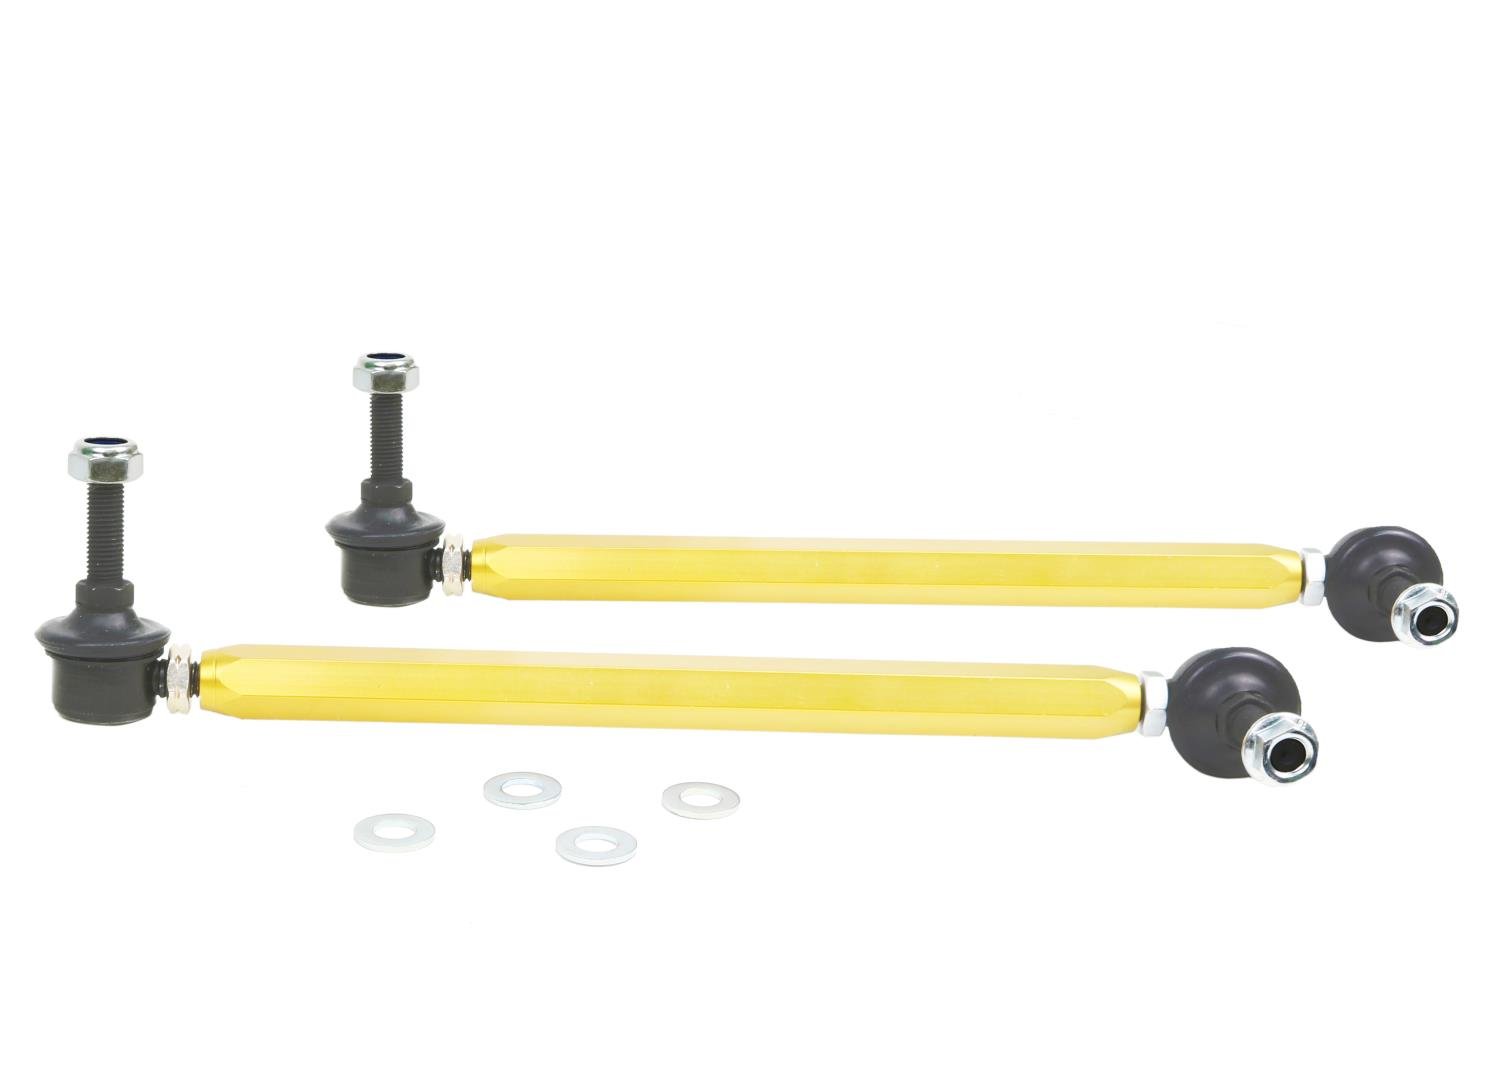 KLC140-295 Universal Sway Bar Link Kit Heavy Duty Adjustable Steel Ball Joint